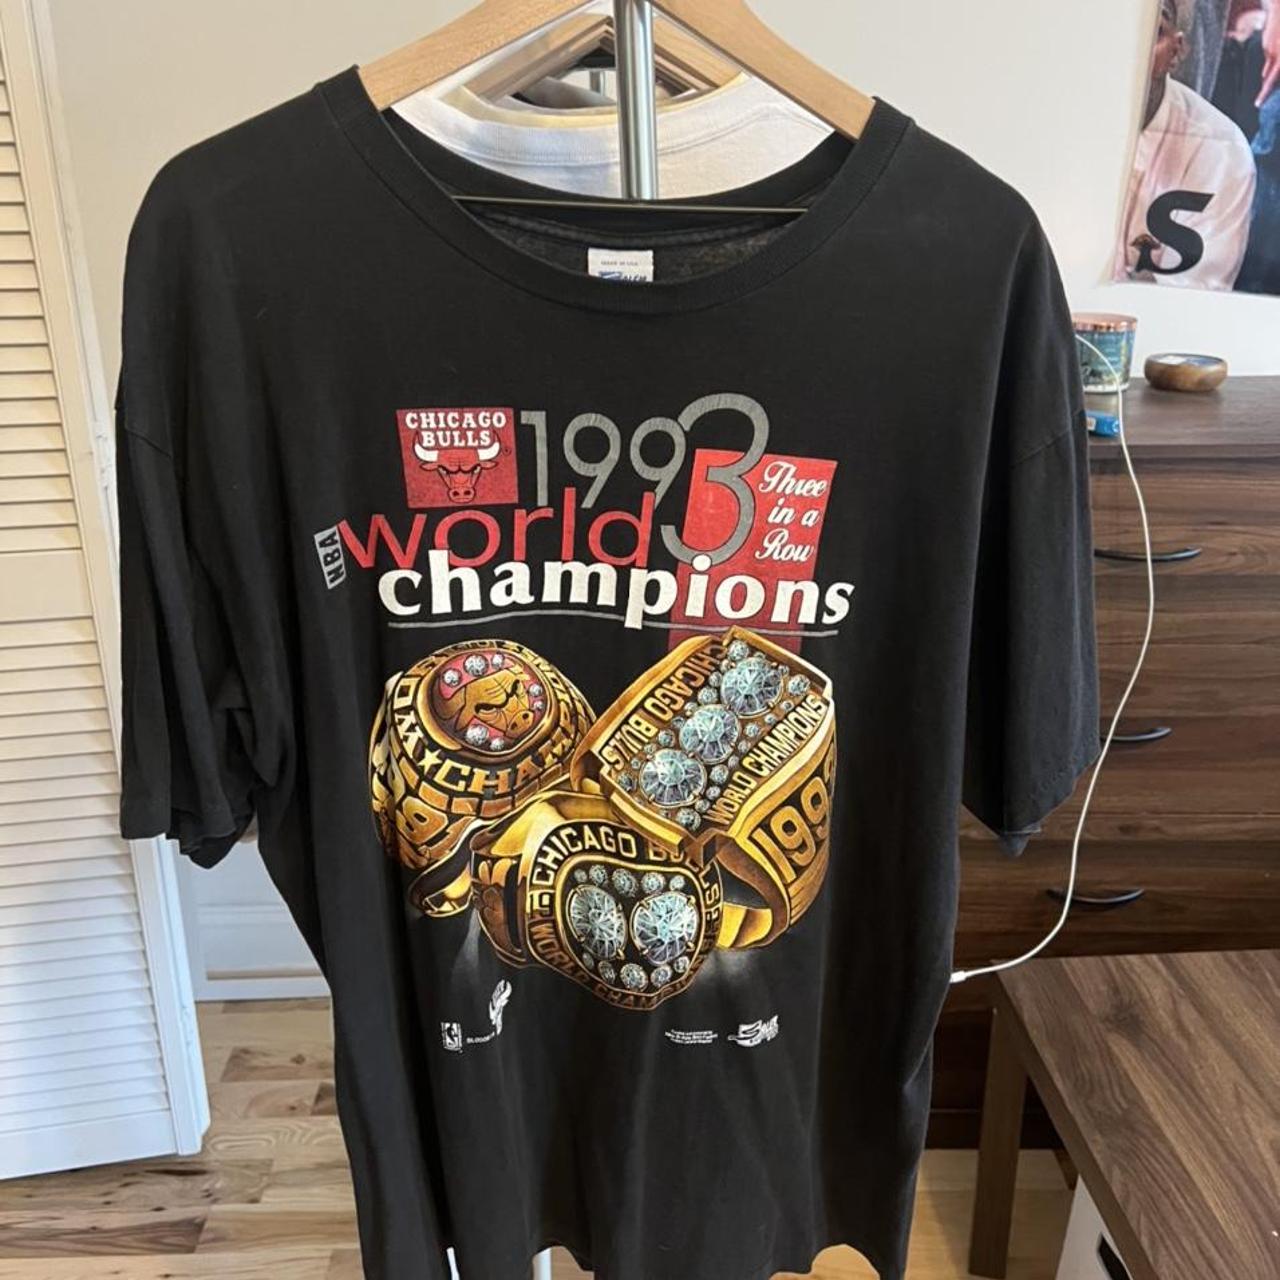 chicago bulls 1993 championship shirt